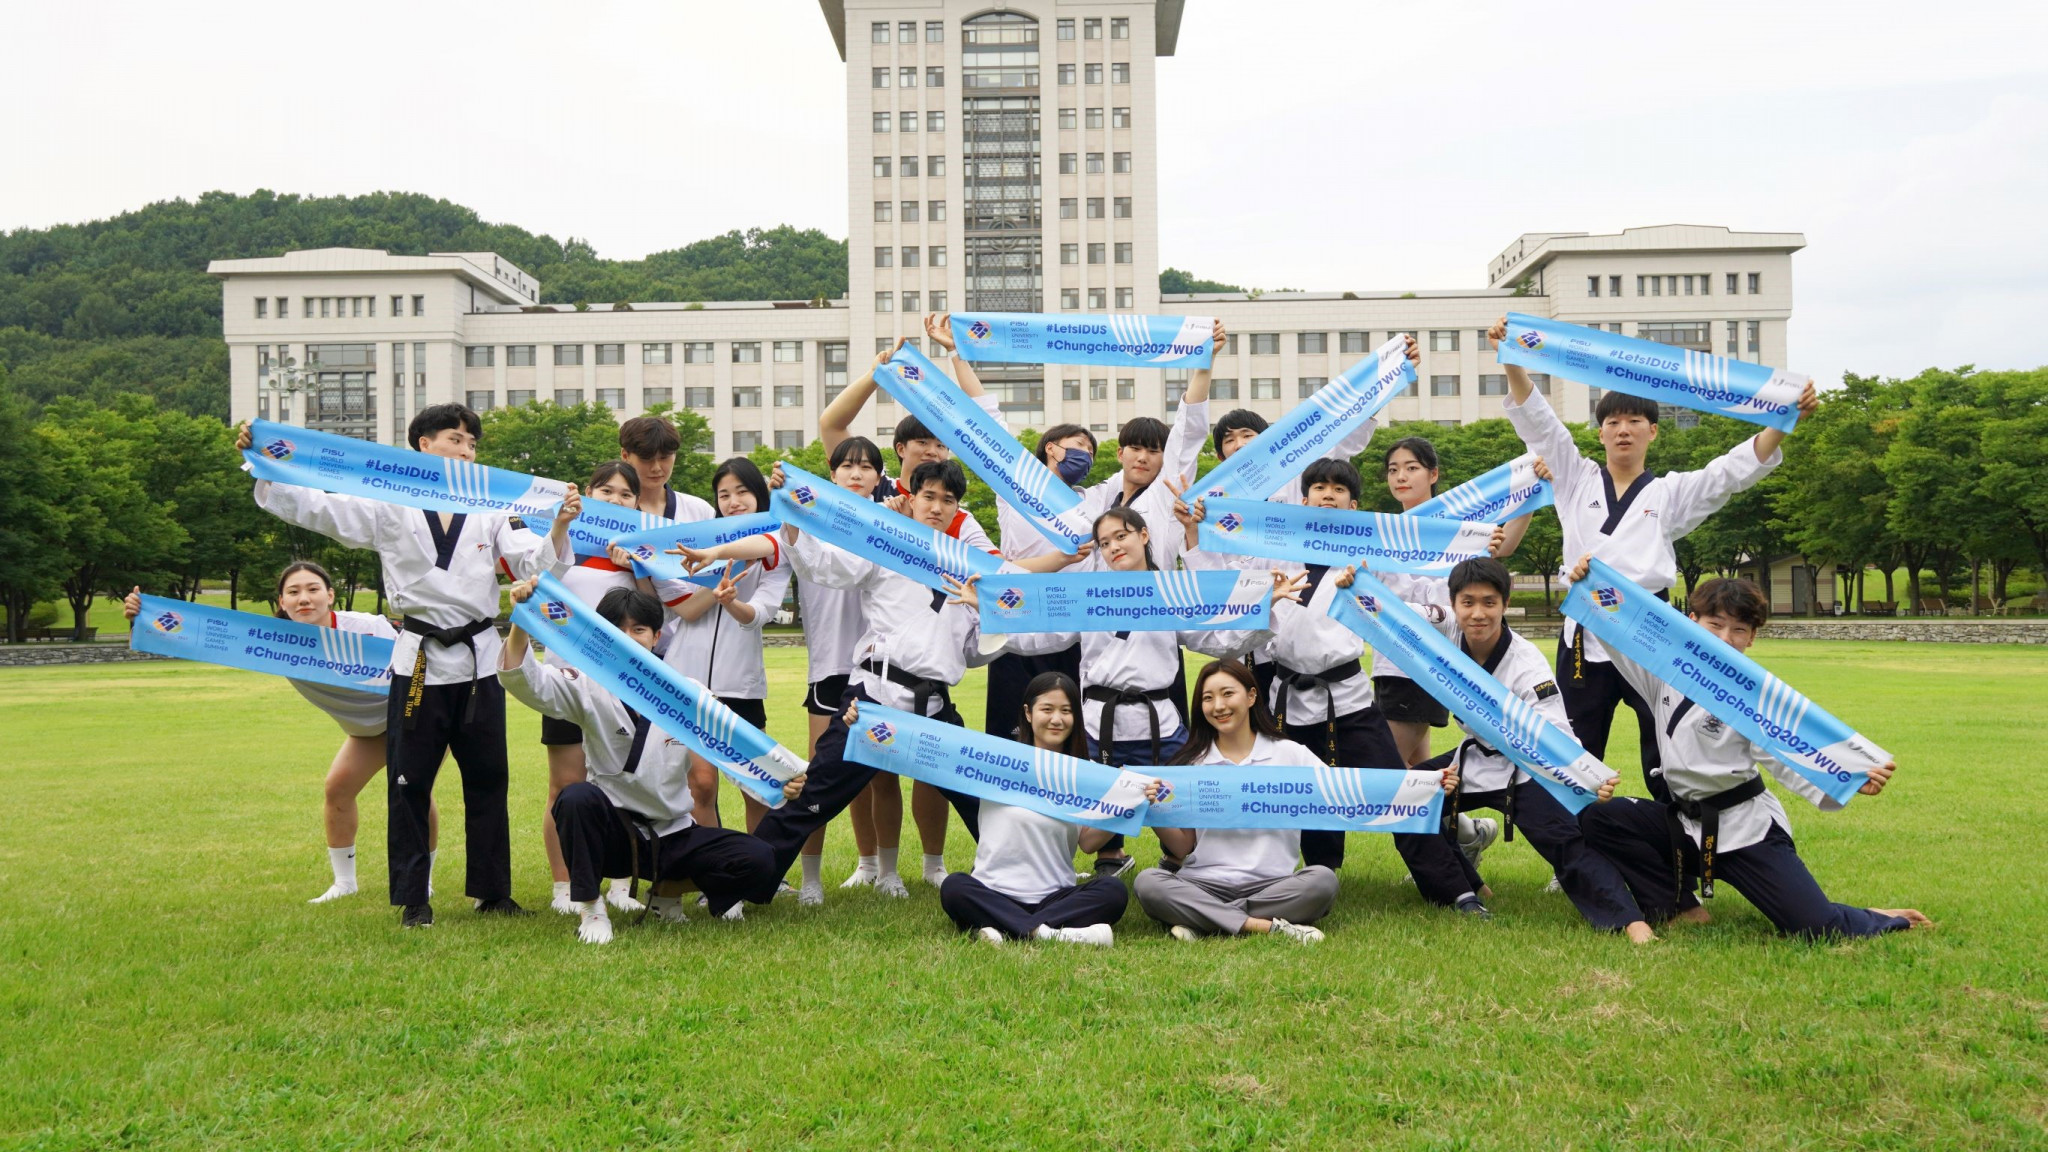 South Korea launches Chungcheong Summer World University Games Bid Committee 